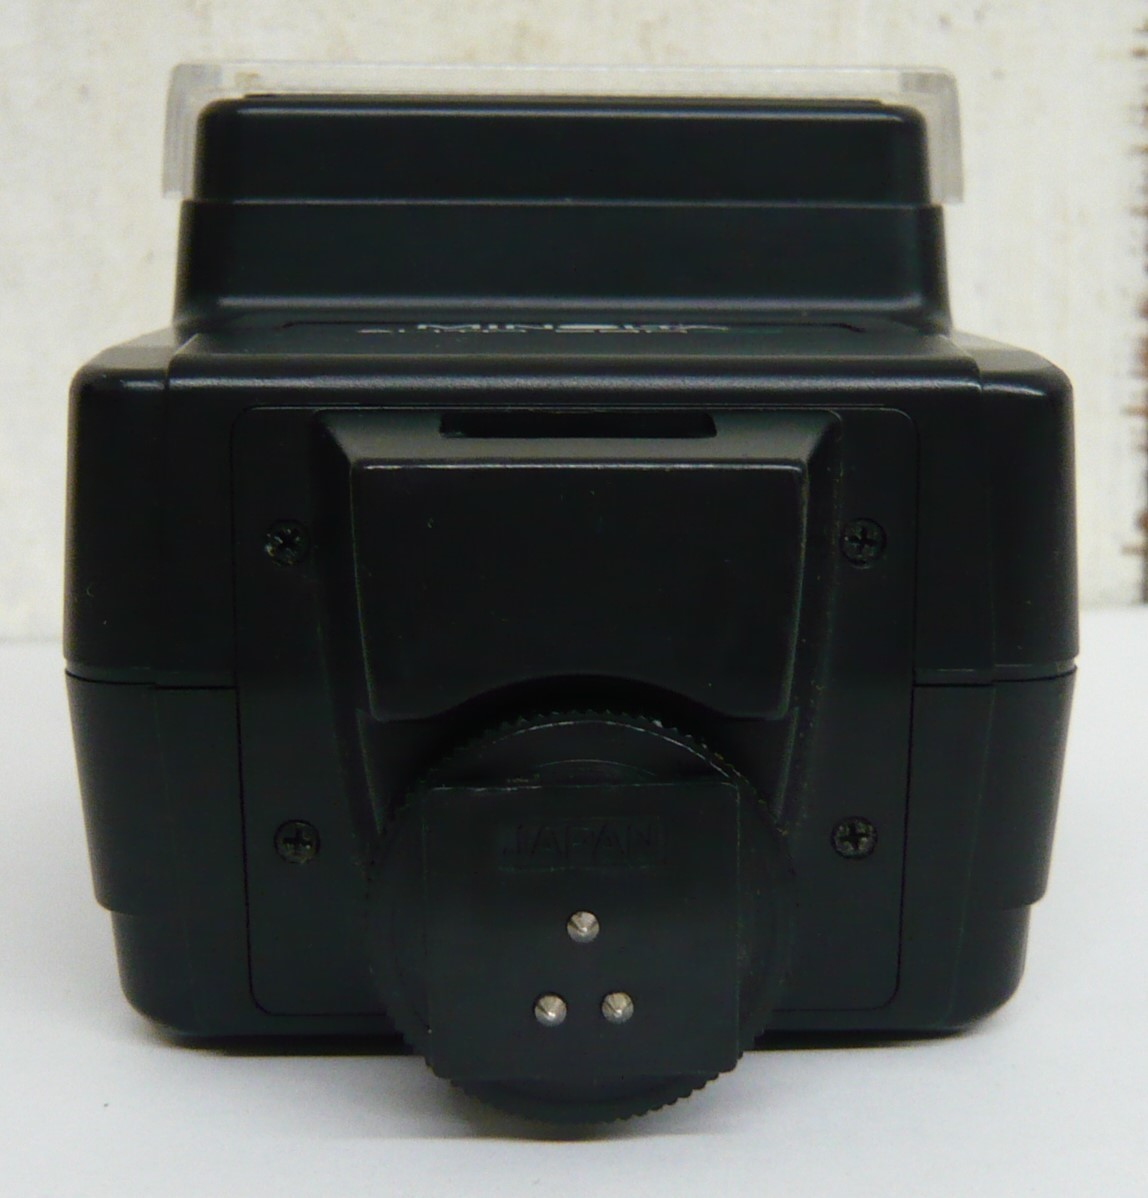  retro that time thing RETRO CAMERA MINOLTA[ Minolta film camera supplies accessory strobo AUTO 280PX Junk ]Made in japan made in Japan 